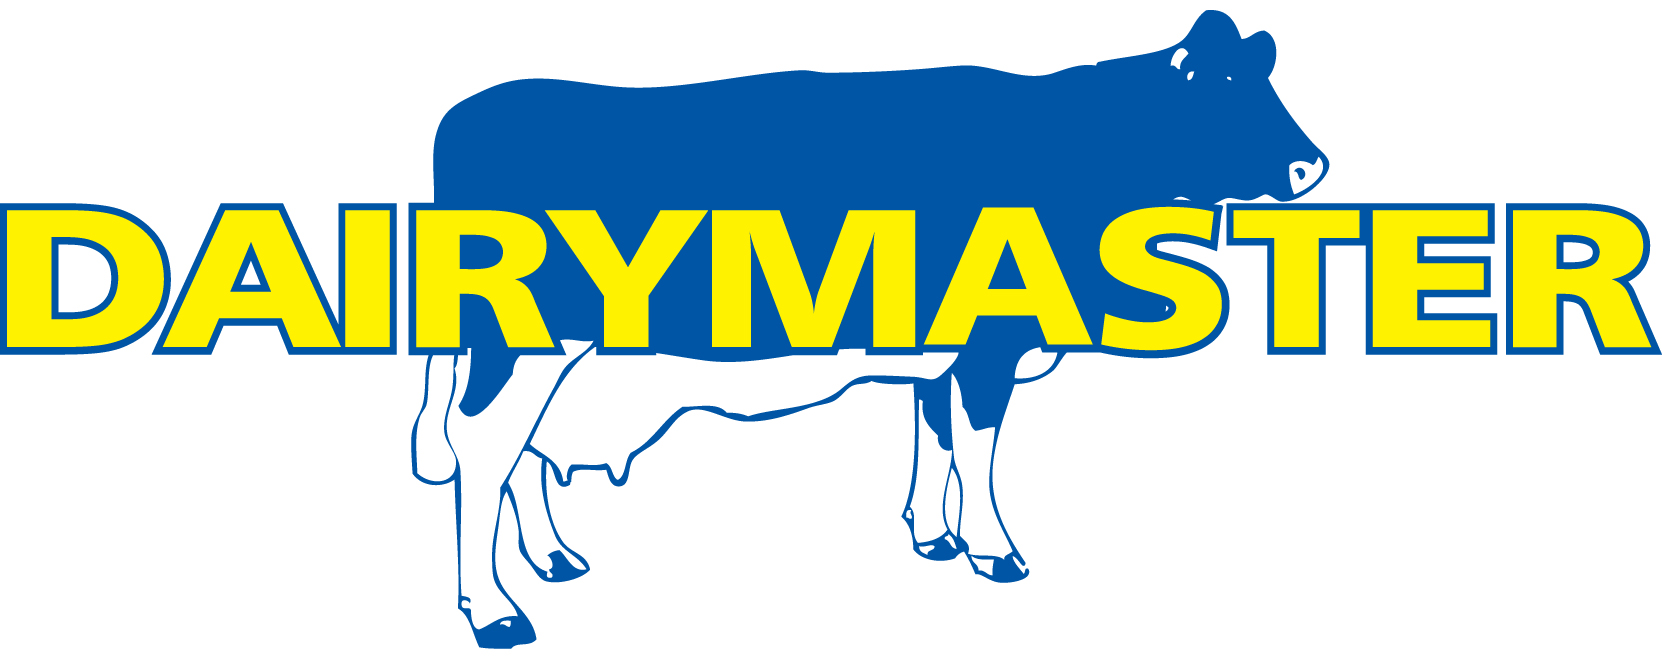 Dairymaster (Original)